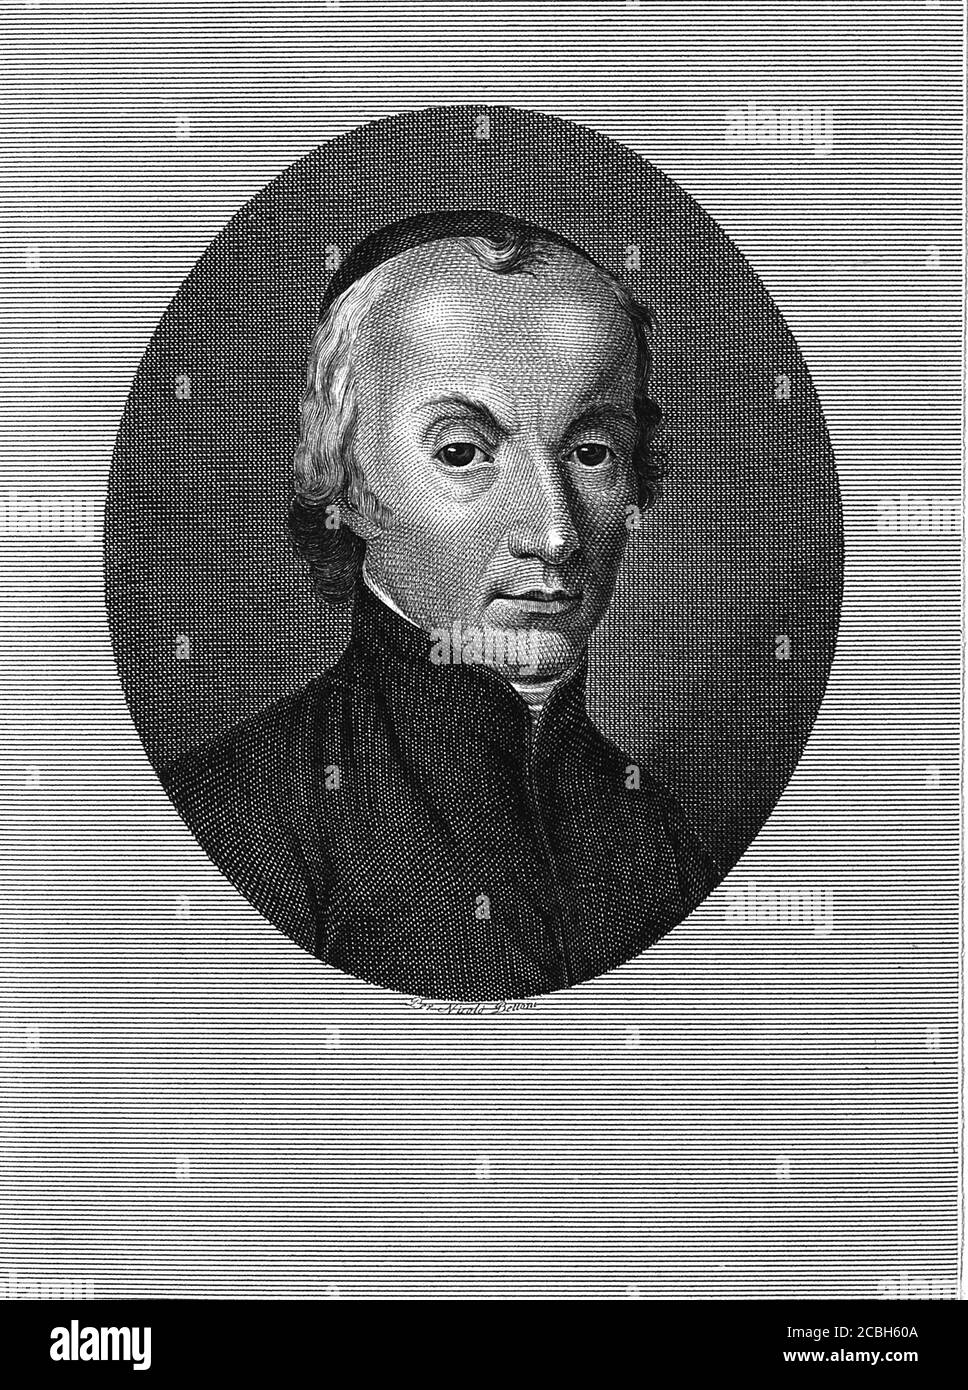 1820 c, ITALY : The celebrated italian priest and astronomer GIUSEPPE PIAZZI ( 1746 - 1826 ). Discover of Cerere ( Ceres , the dwarf planet ) in 1801 . Portrait engraved by N. Bettoni . - SCIENZA - ritratto - portrait - prete - priest - SCIENZIATO - SCIENZA -  SCIENCE - SCIENTIST- HISTORY -  foto storiche  - ASTRONOMIA - ASTRONOMY - ASTRONOMER - ASTRONOMO -  illustrazione - illustration - engraving - incisione  - CATHOLIC RELIGION - RELIGIONE CATTOLICA --- ARCHIVIO GBB Stock Photo